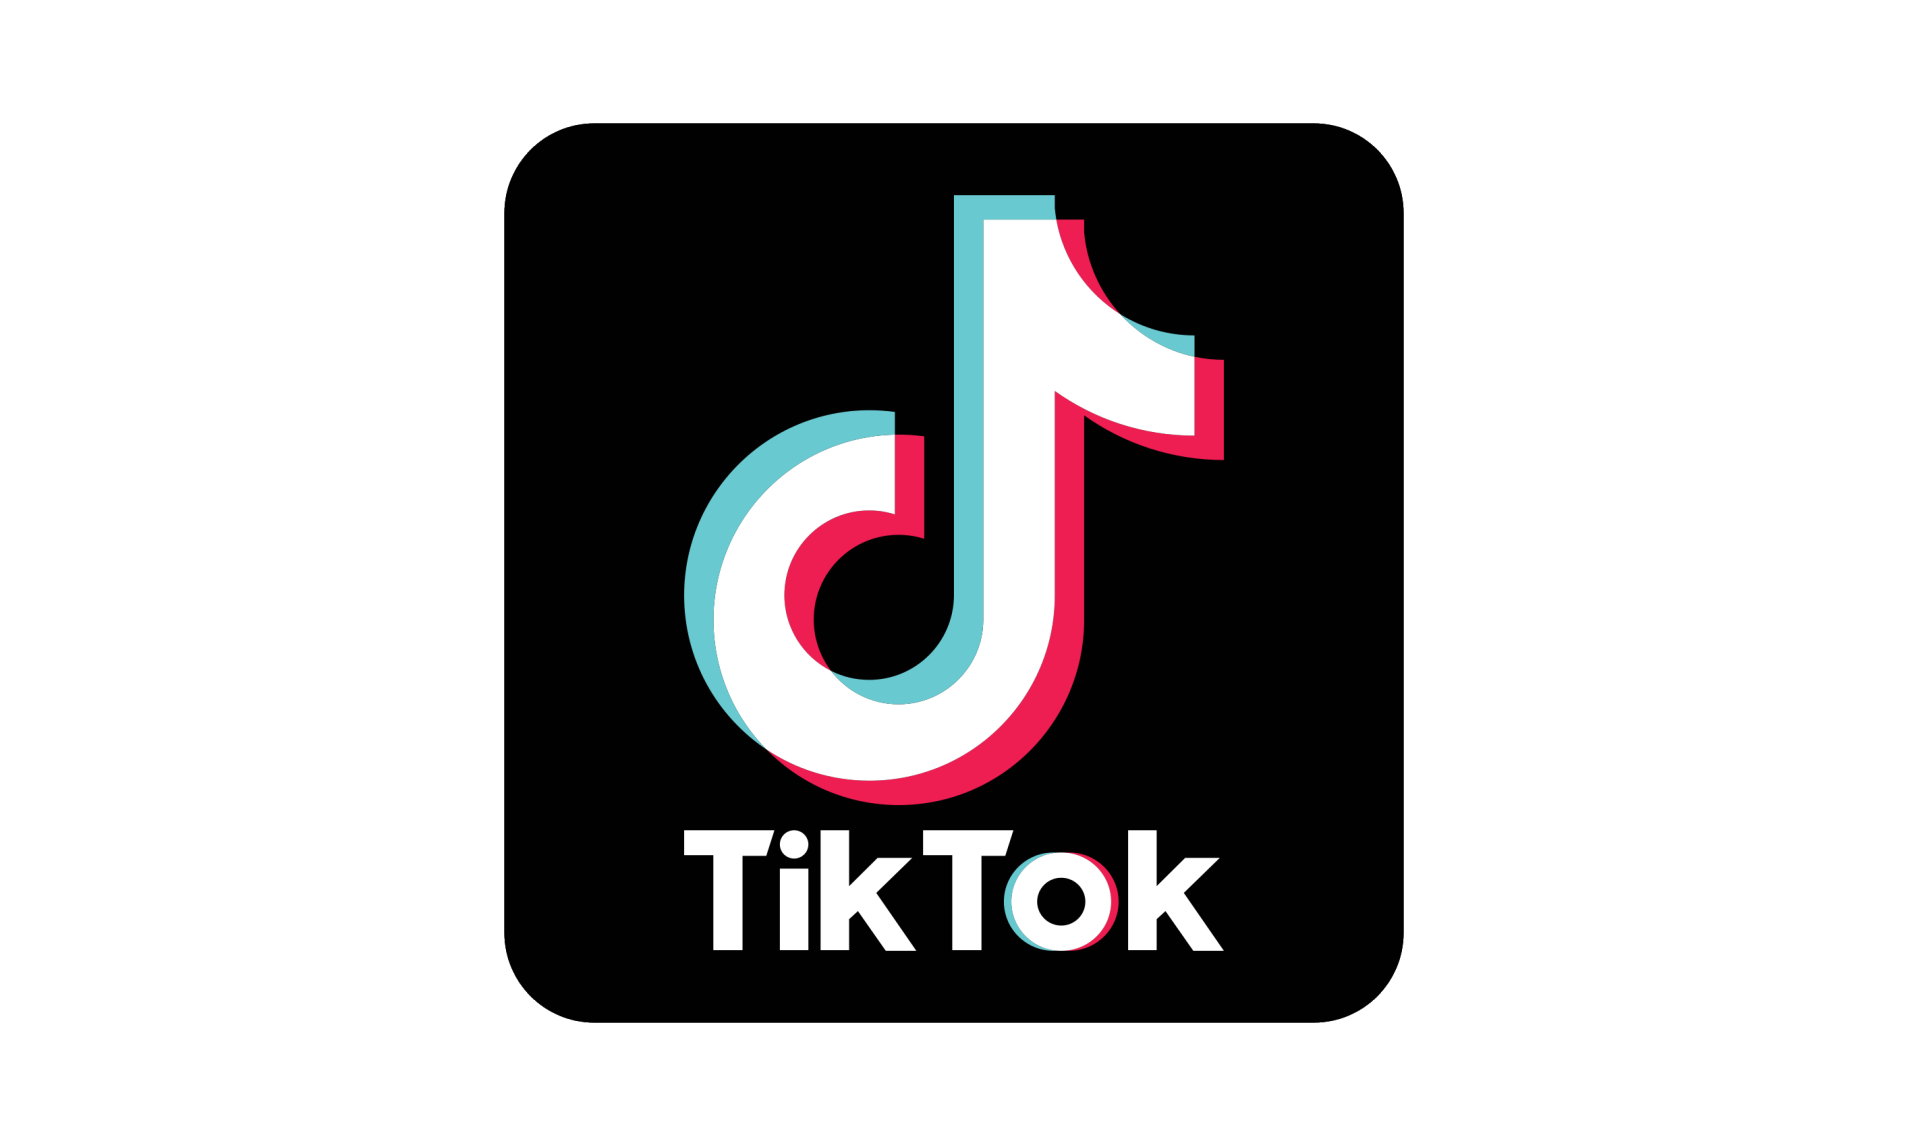 About TikTok